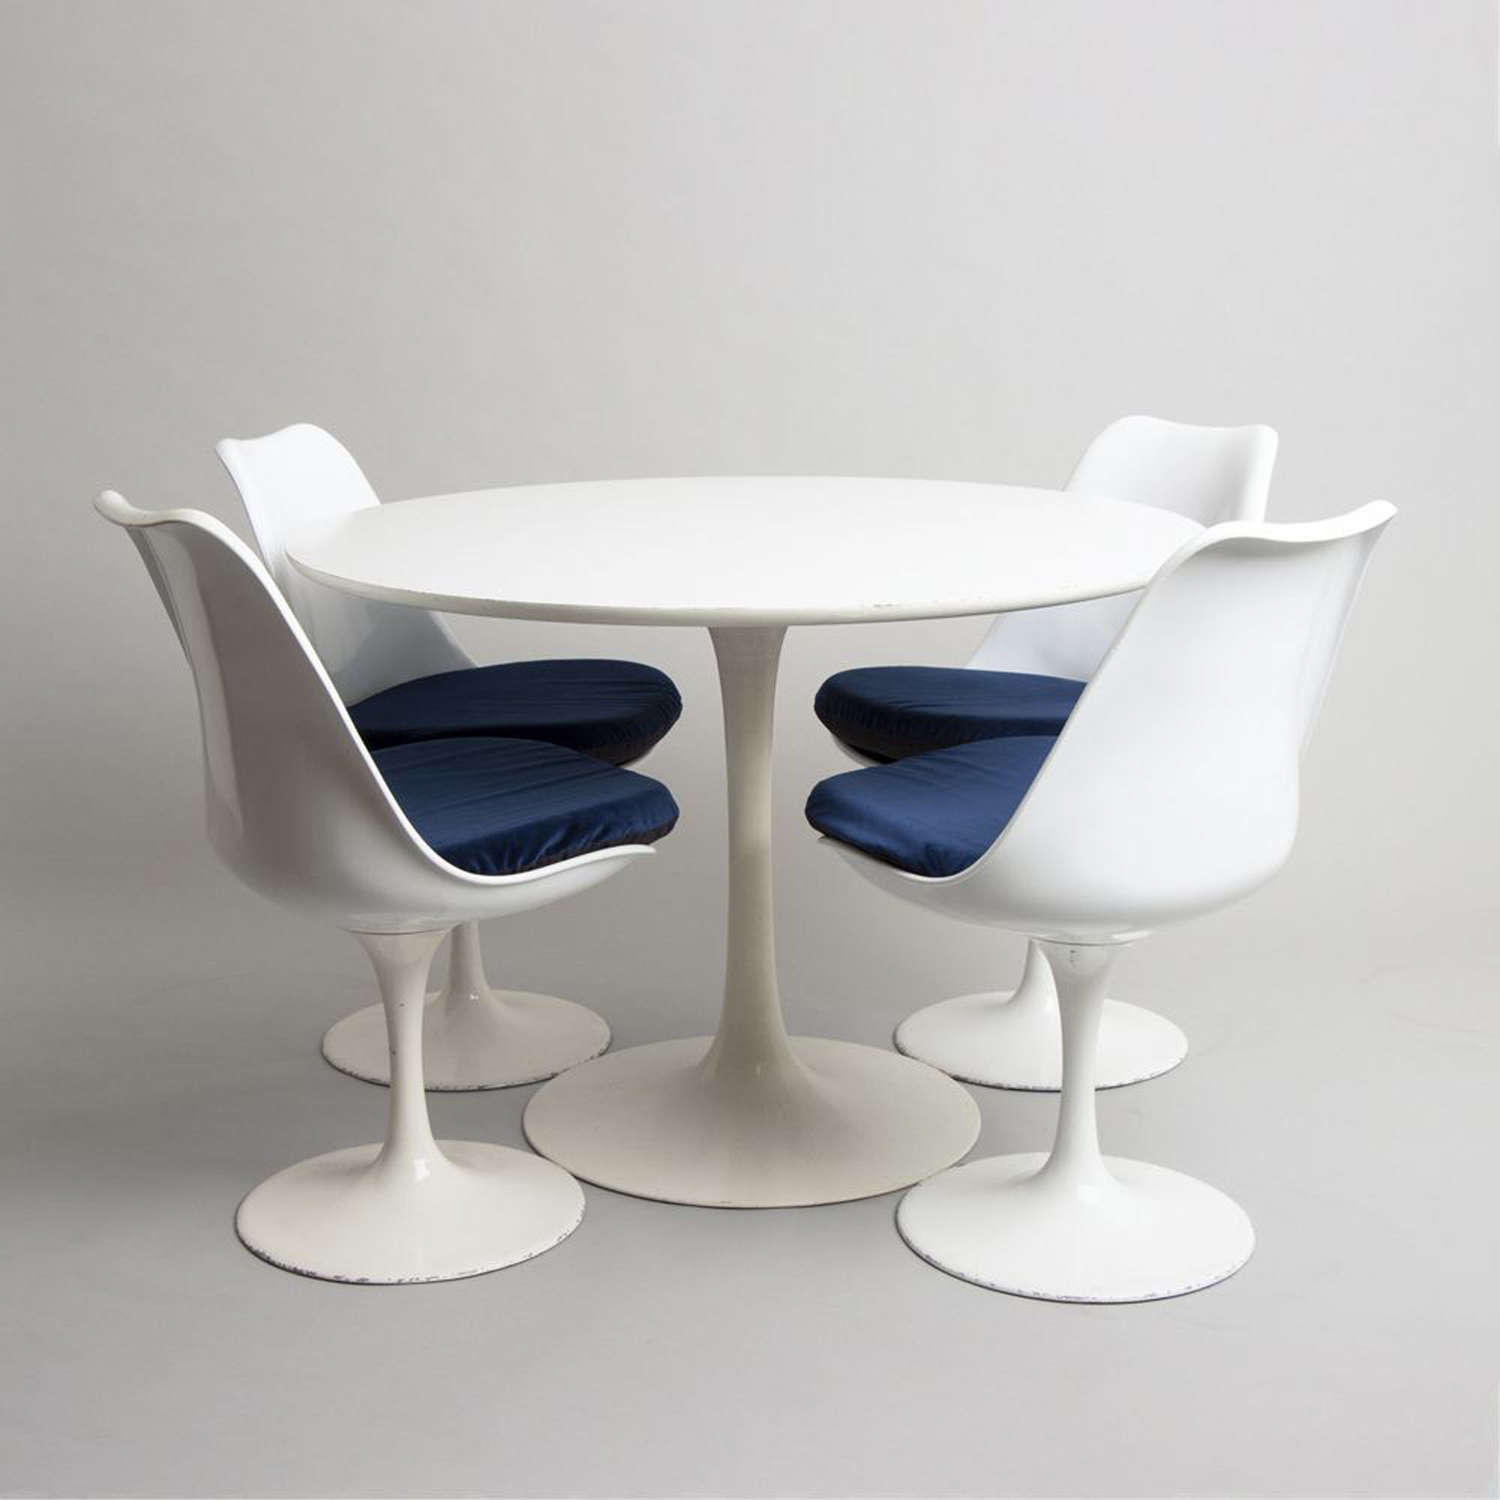 1960s Arkana Tulip Table with 1980s Arkana Style Chairs